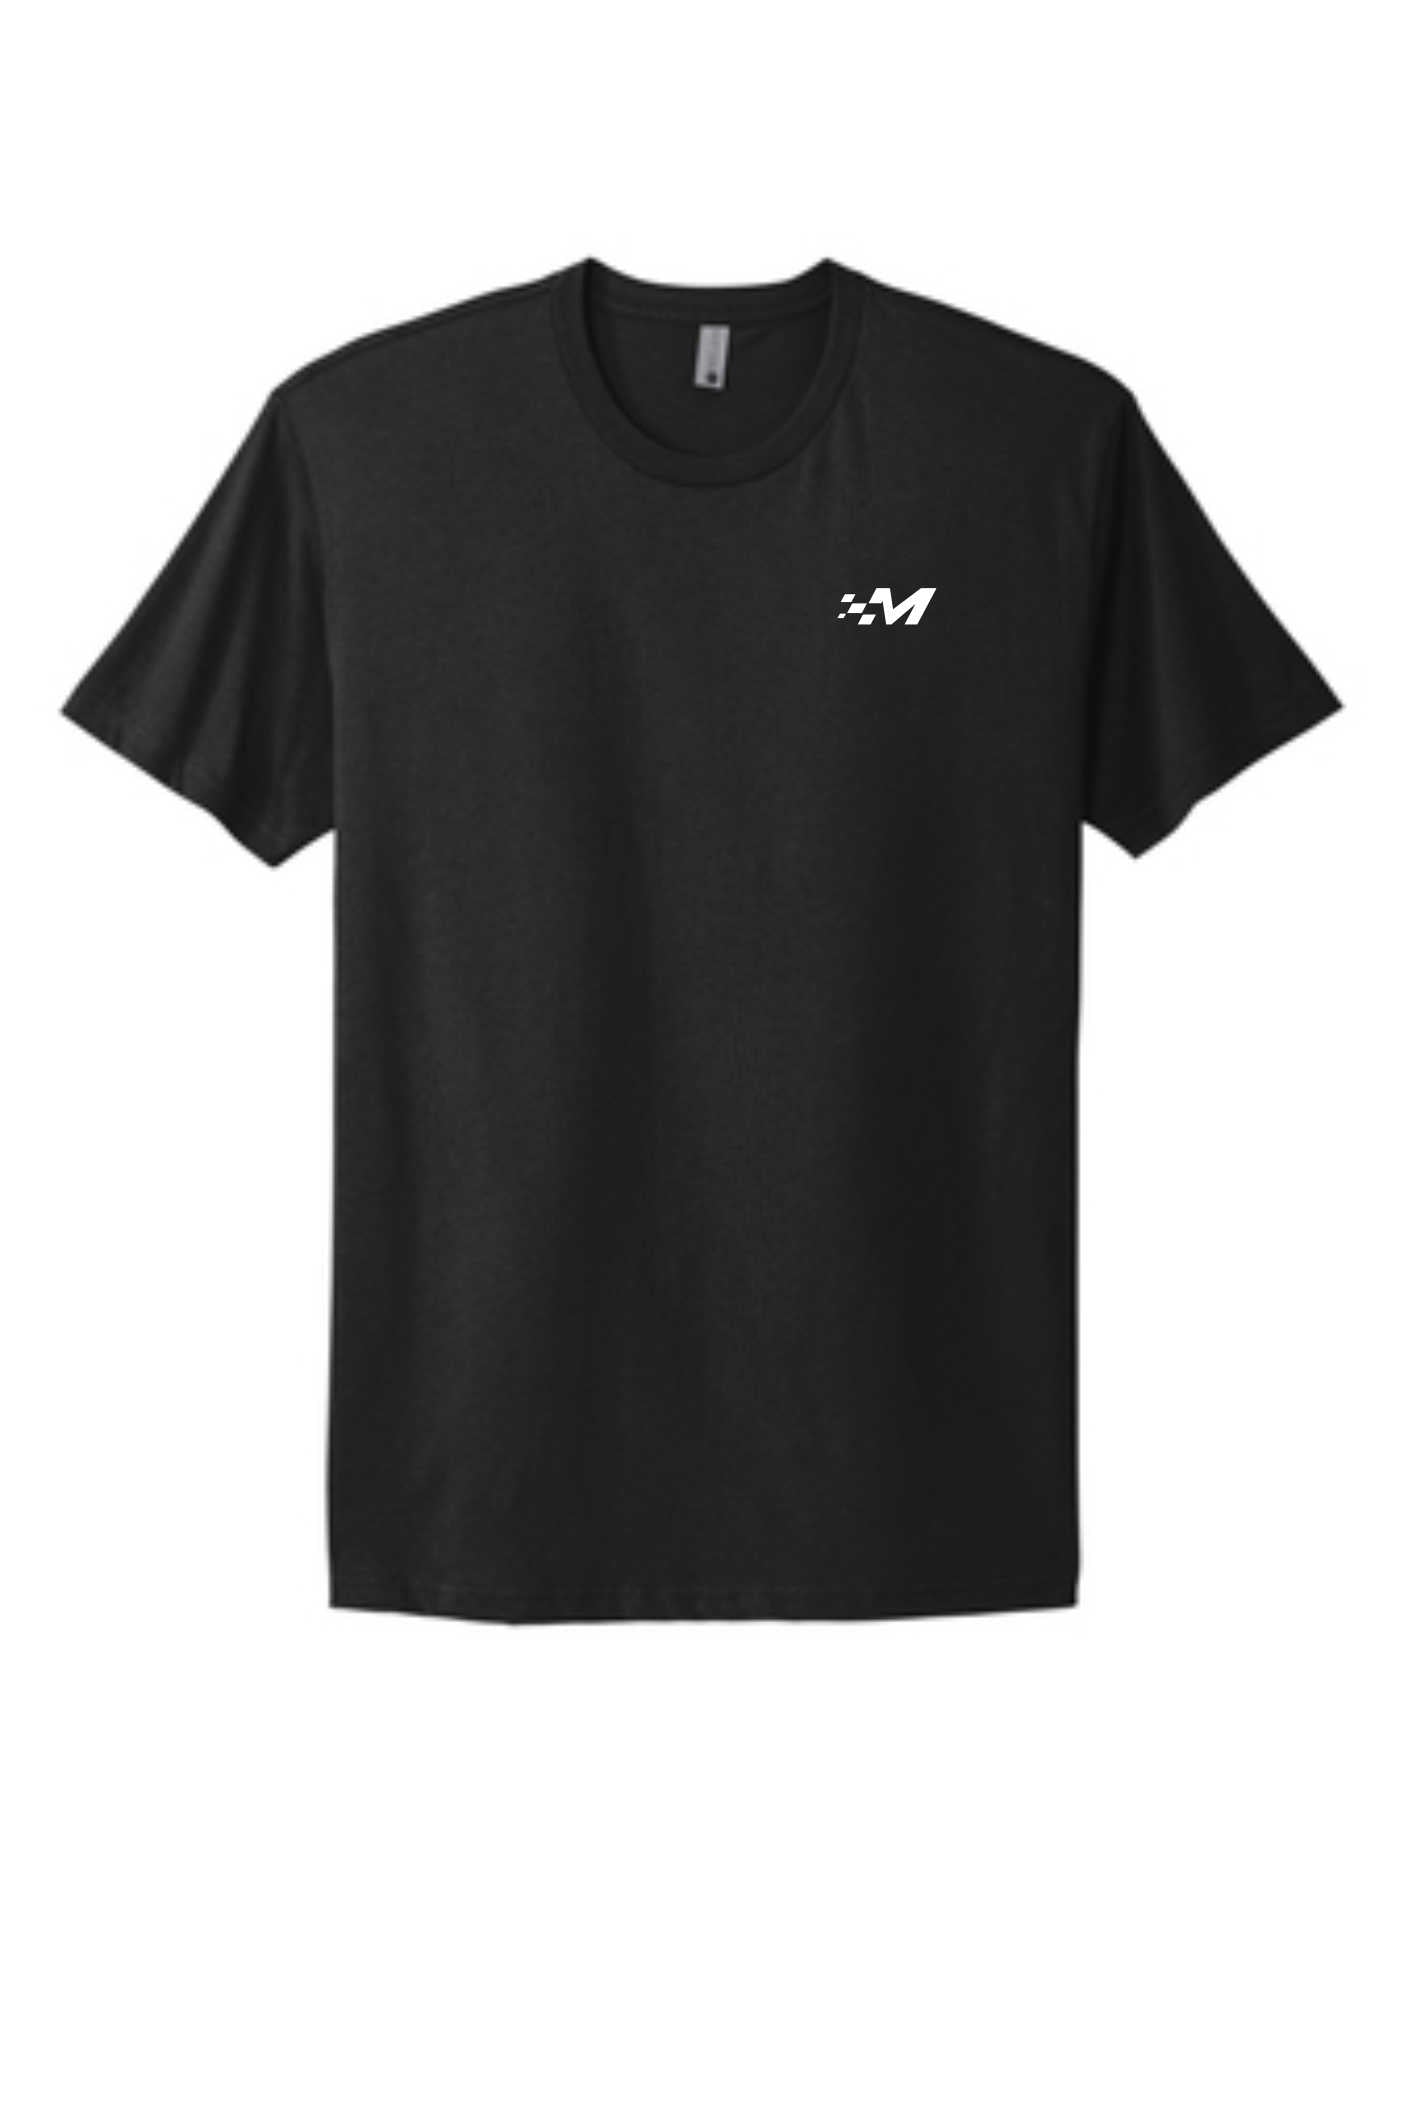 E30 M3 "Generations" - Short Sleeve T-Shirt - Black